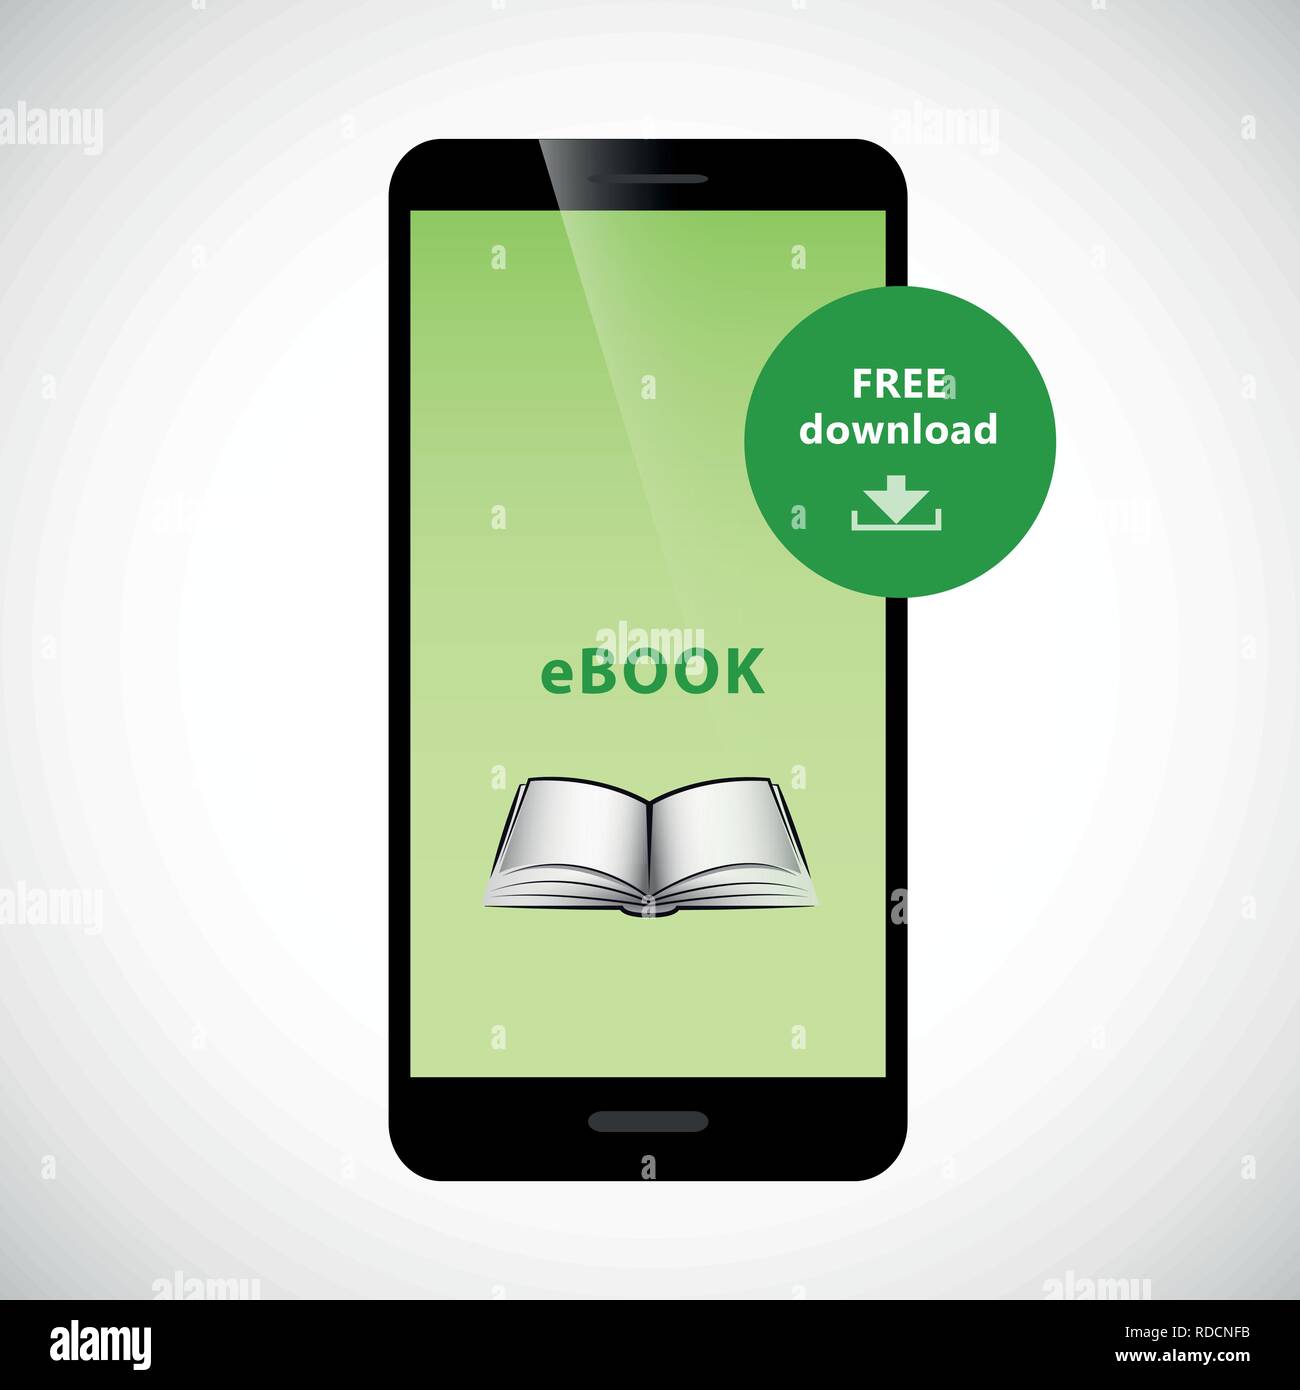 Kostenloses e-Book Download via Smartphone Vektor-illustration EPS 10. Stock Vektor